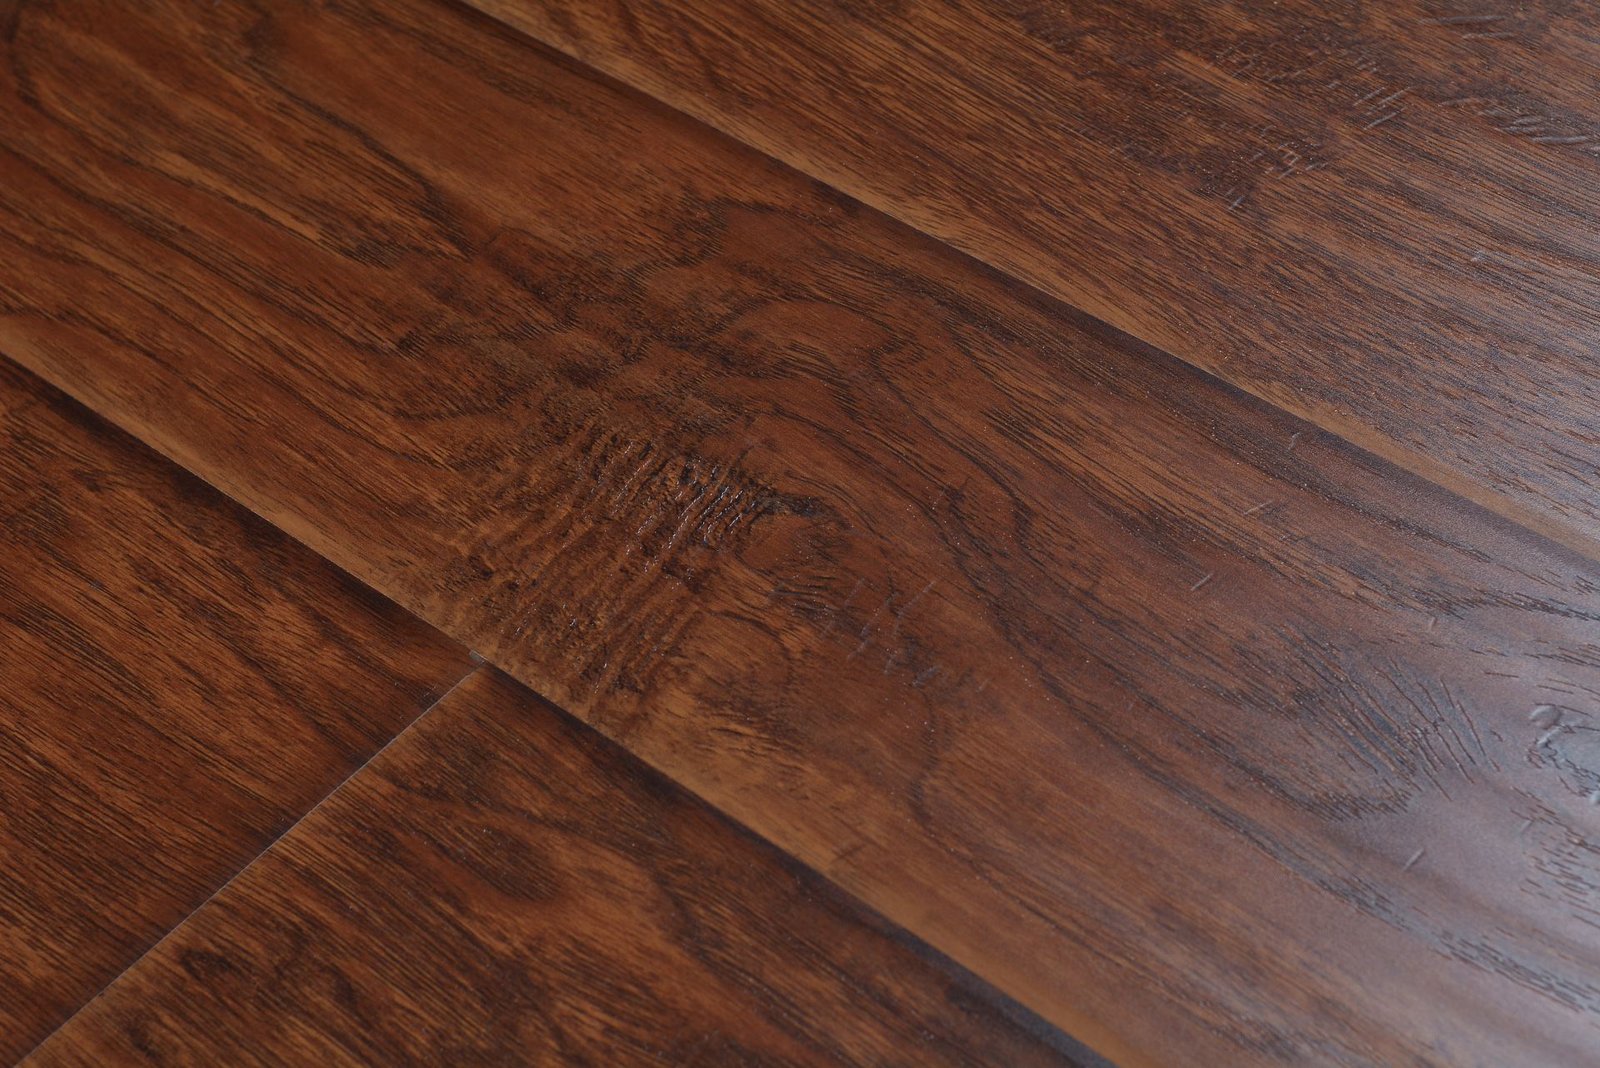 Direct hardwood flooring